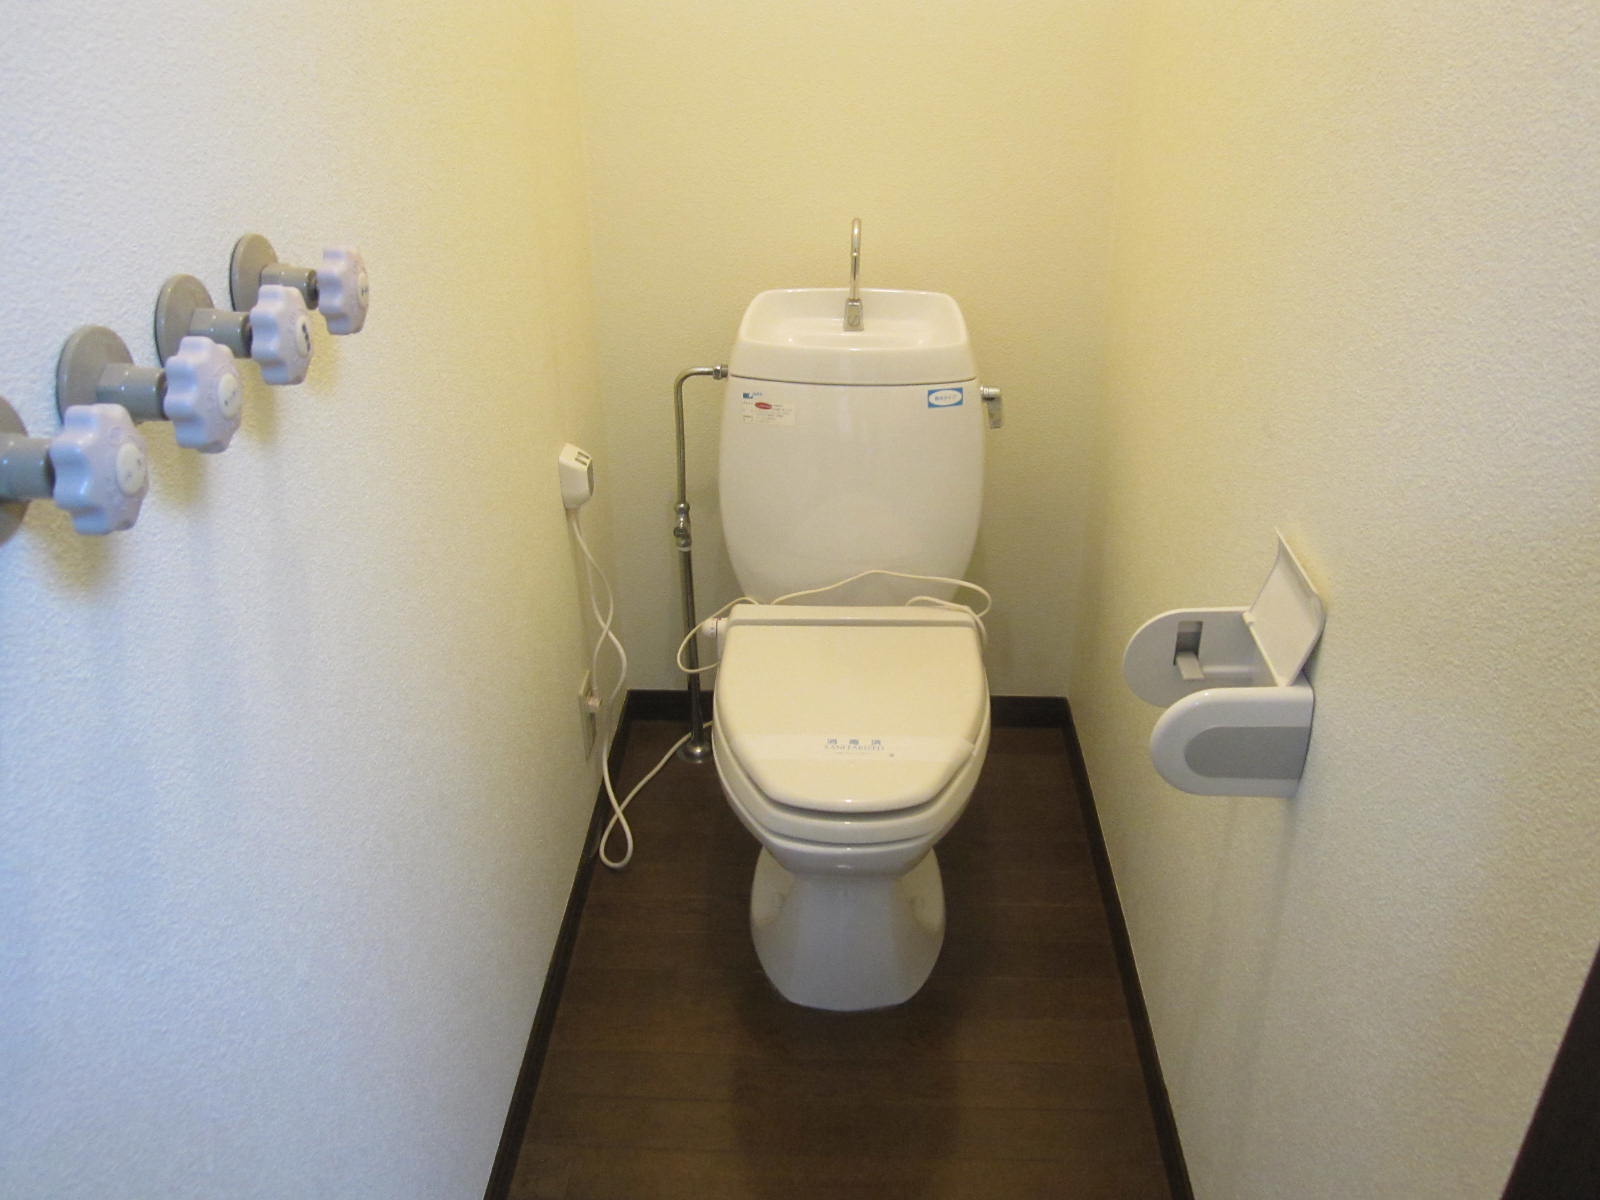 Toilet. Of course, it is flush toilet!